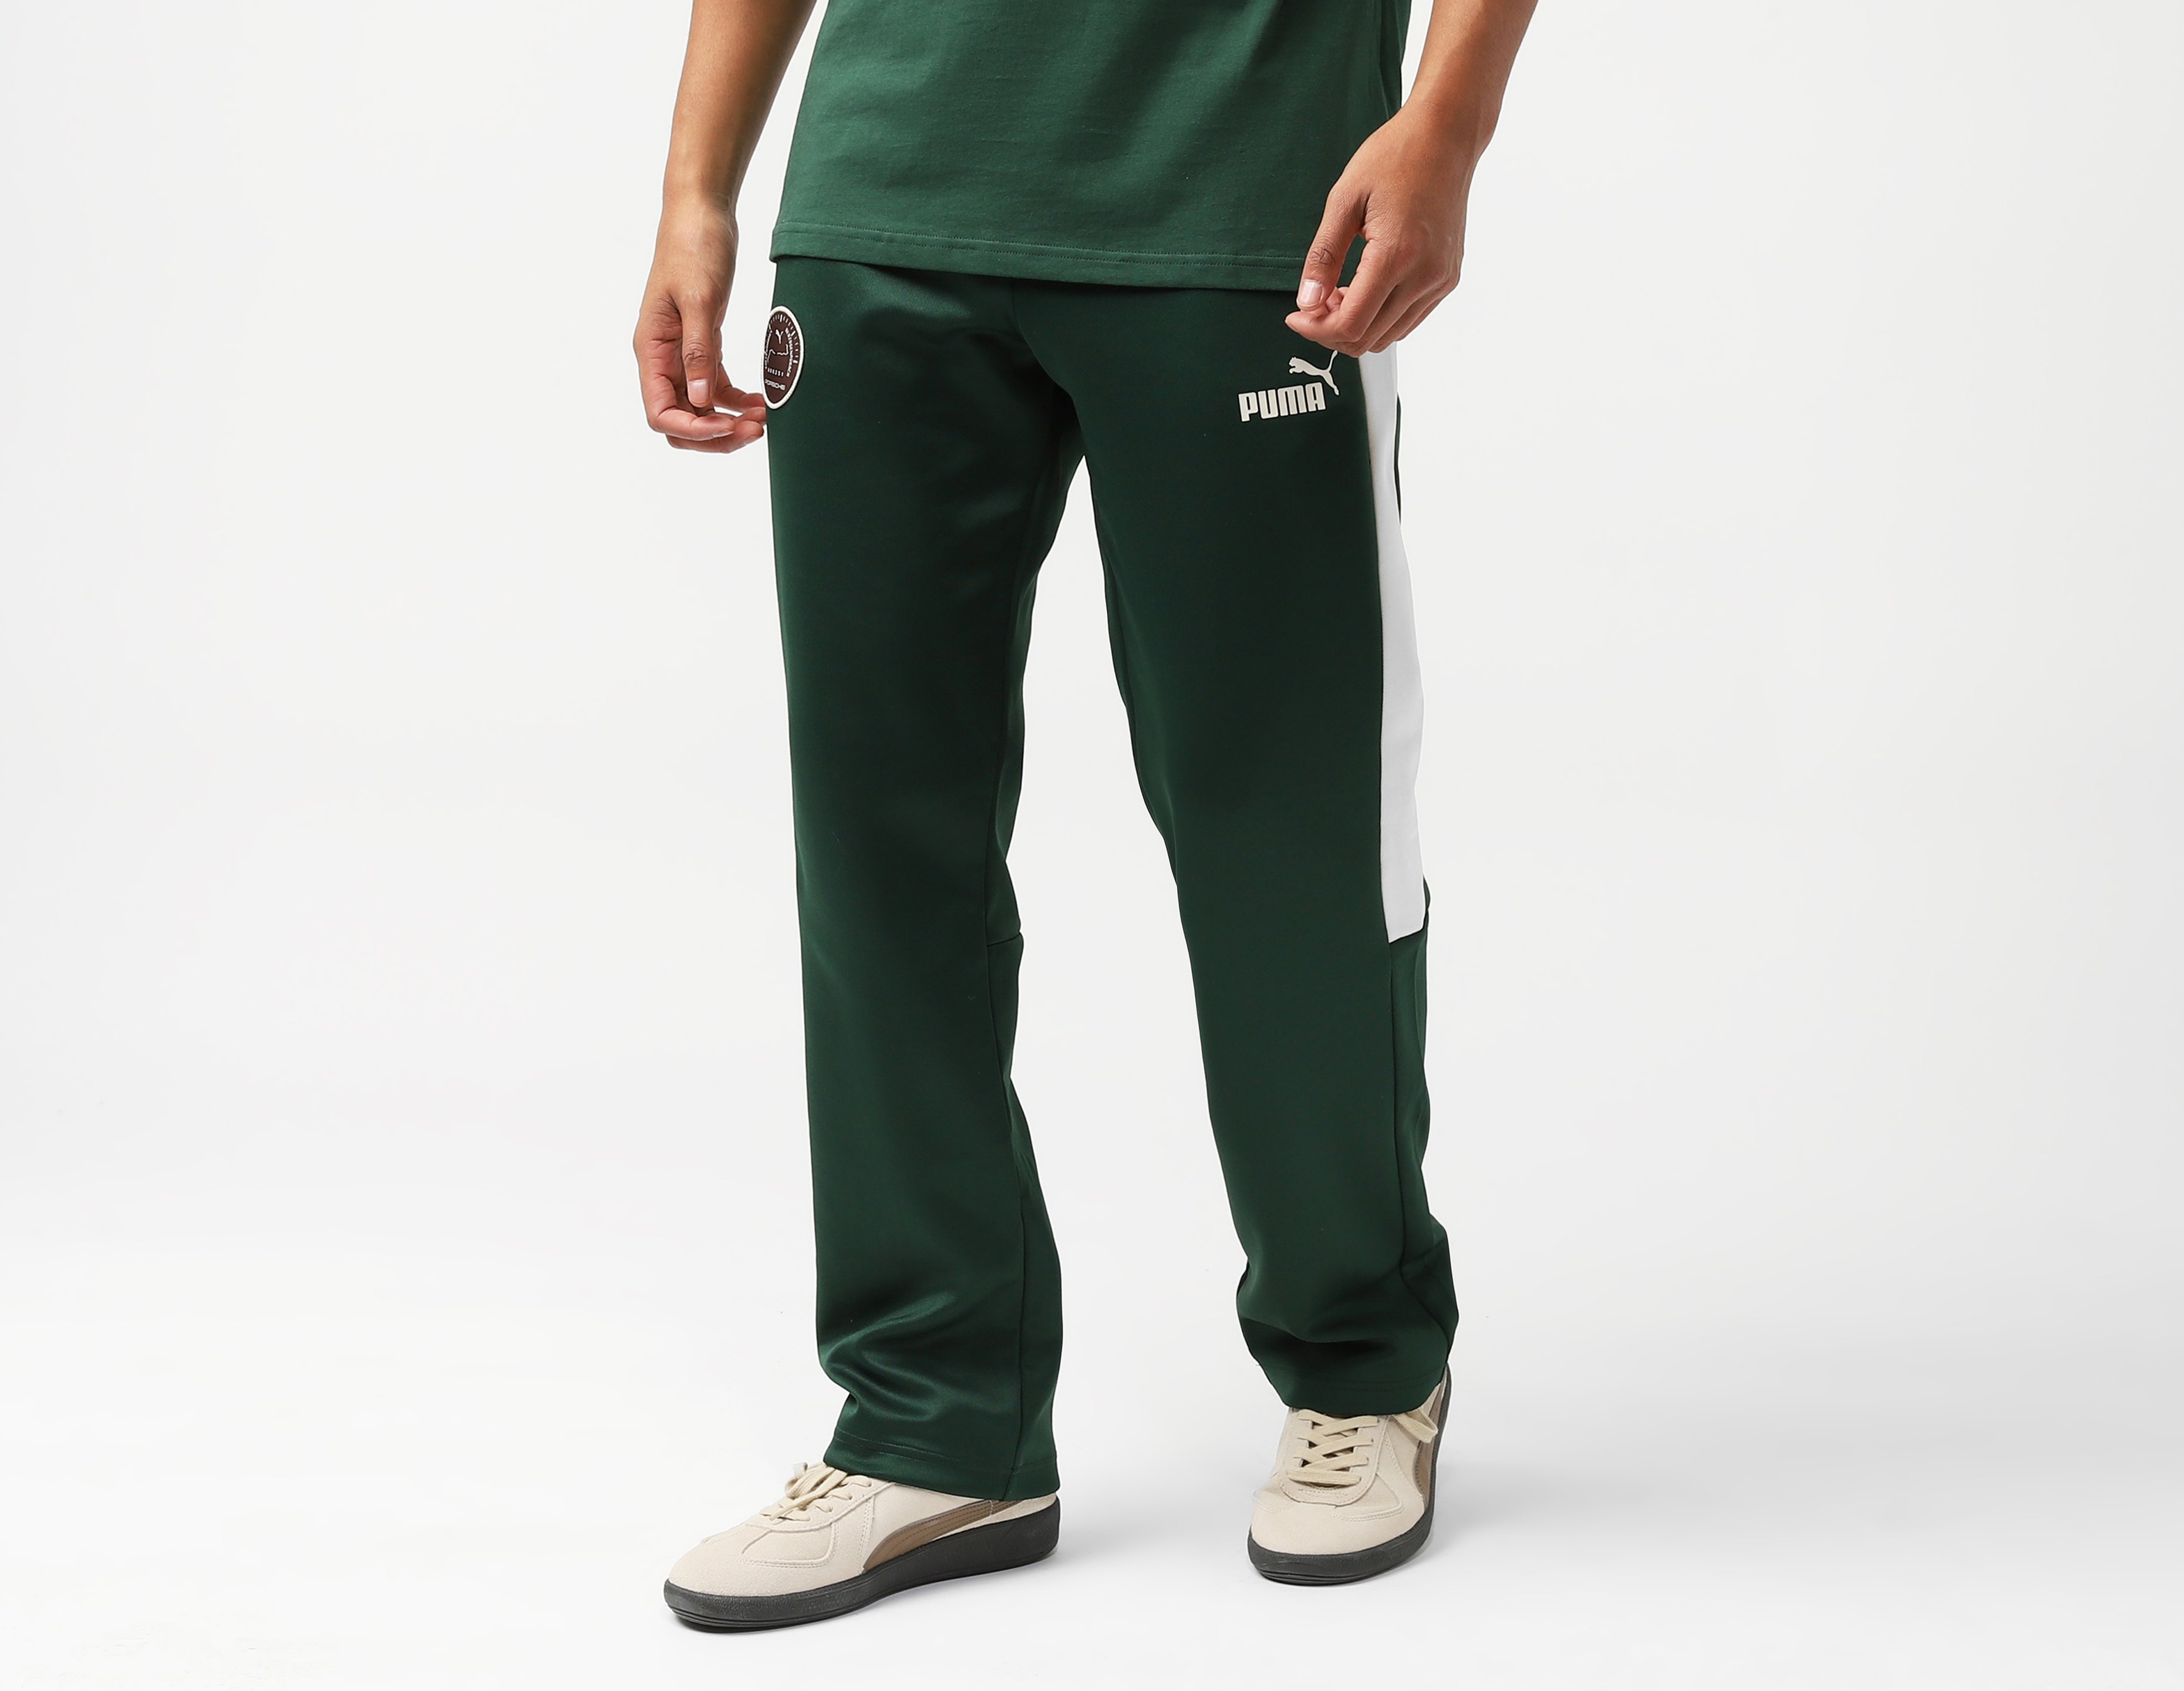 puma x porsche mt7 track pants - size? exclusive, green